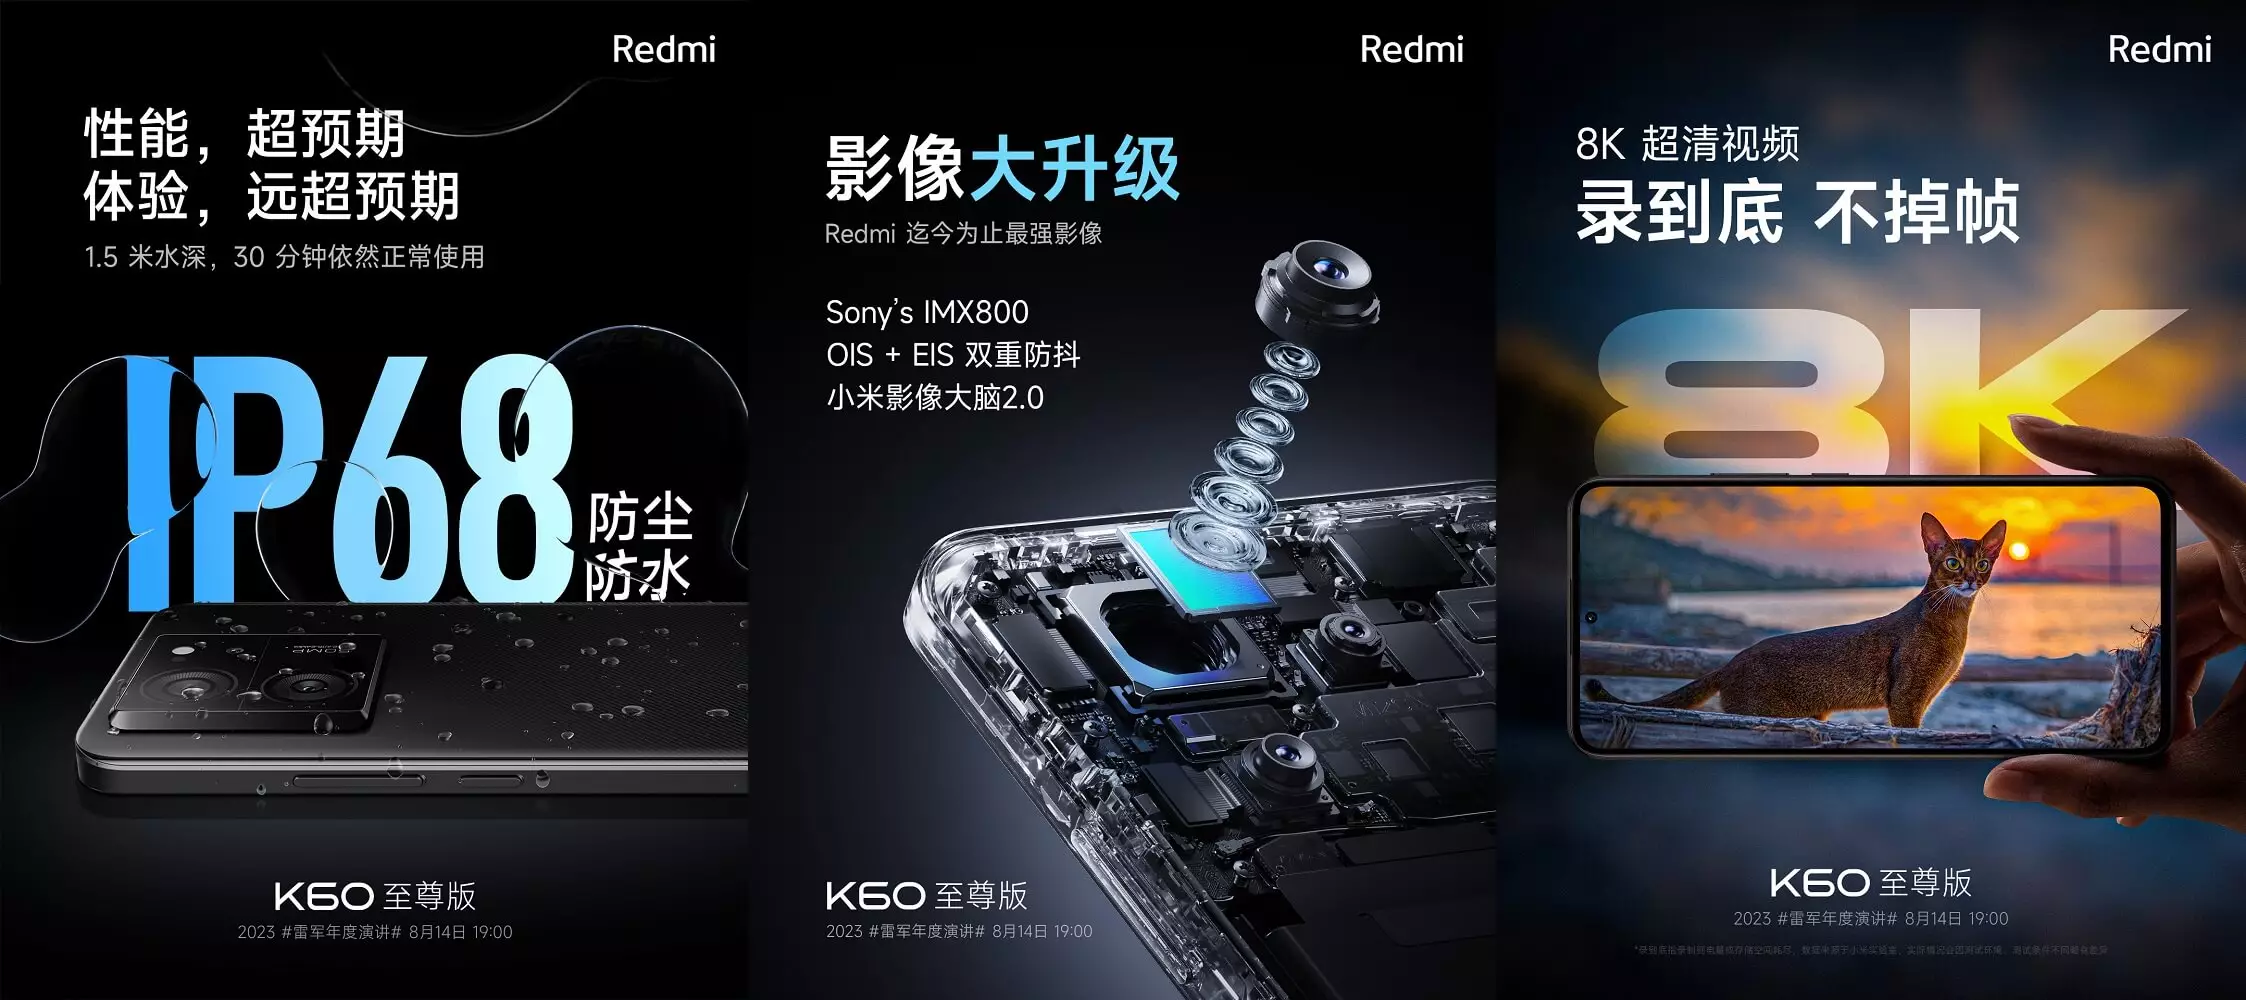 Redmi K60 Ultra features 1 cn.